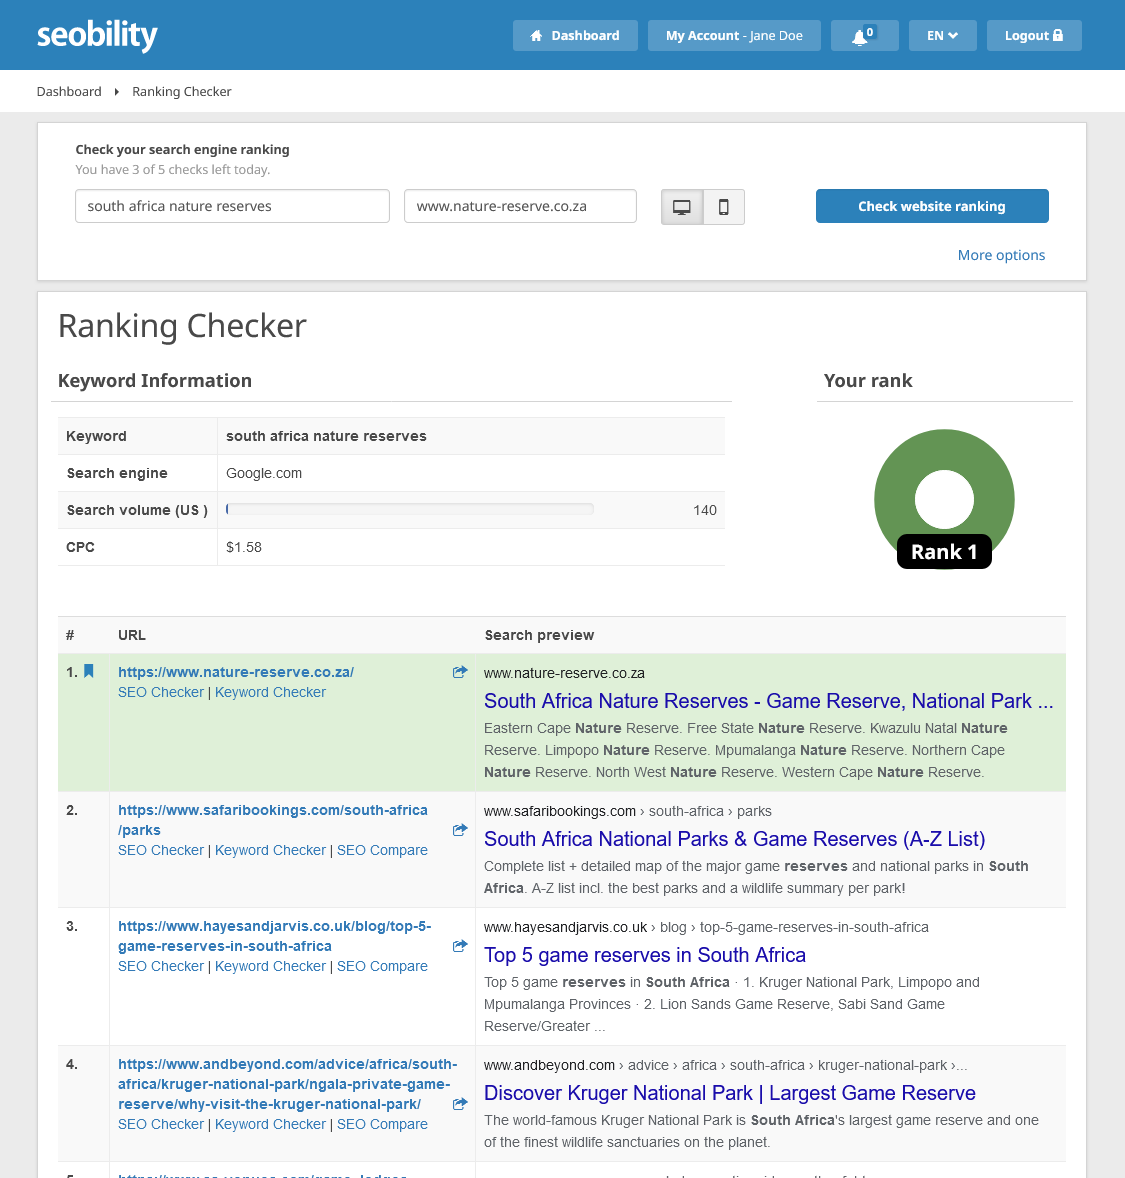 Ranking Checker from Seobility